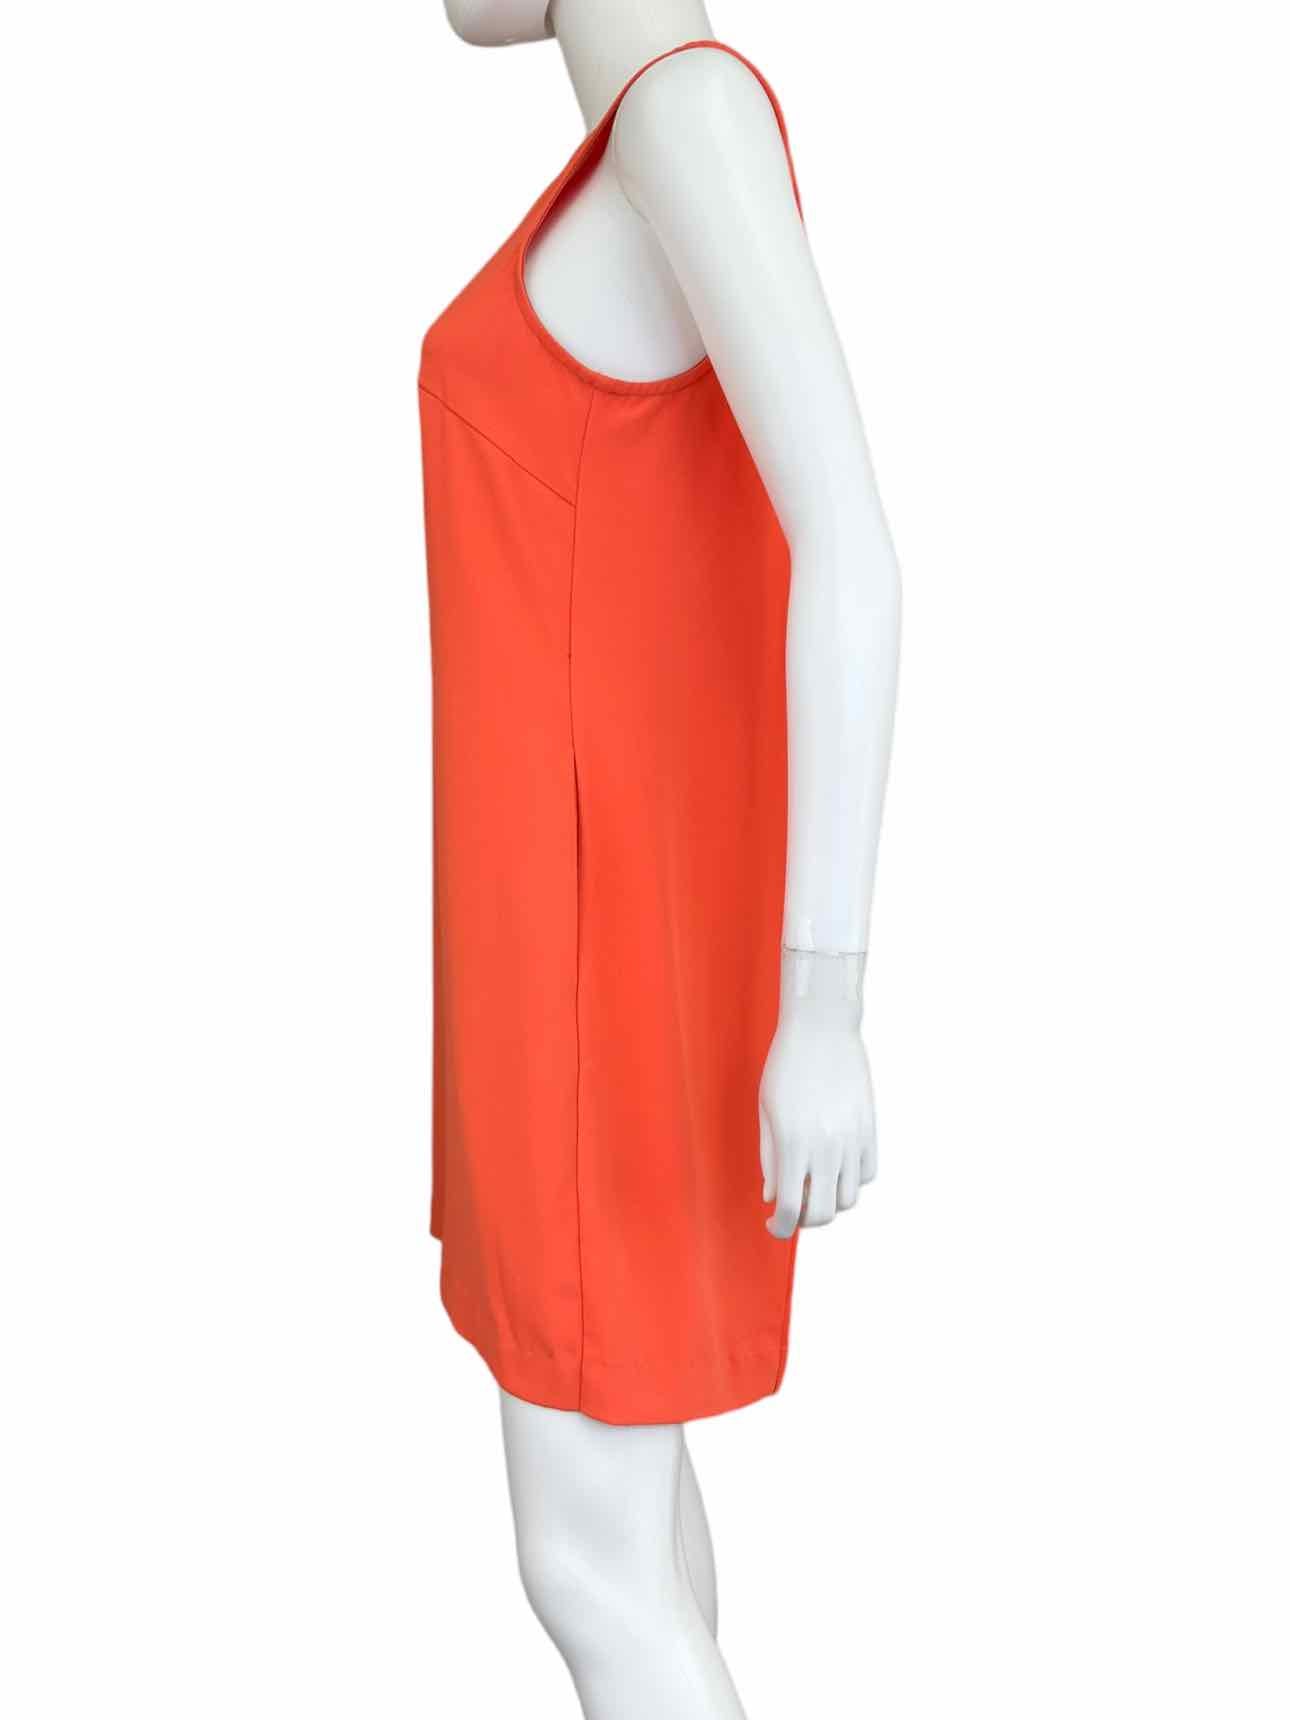 Trina Turk Orange Sheath Dress Size 8